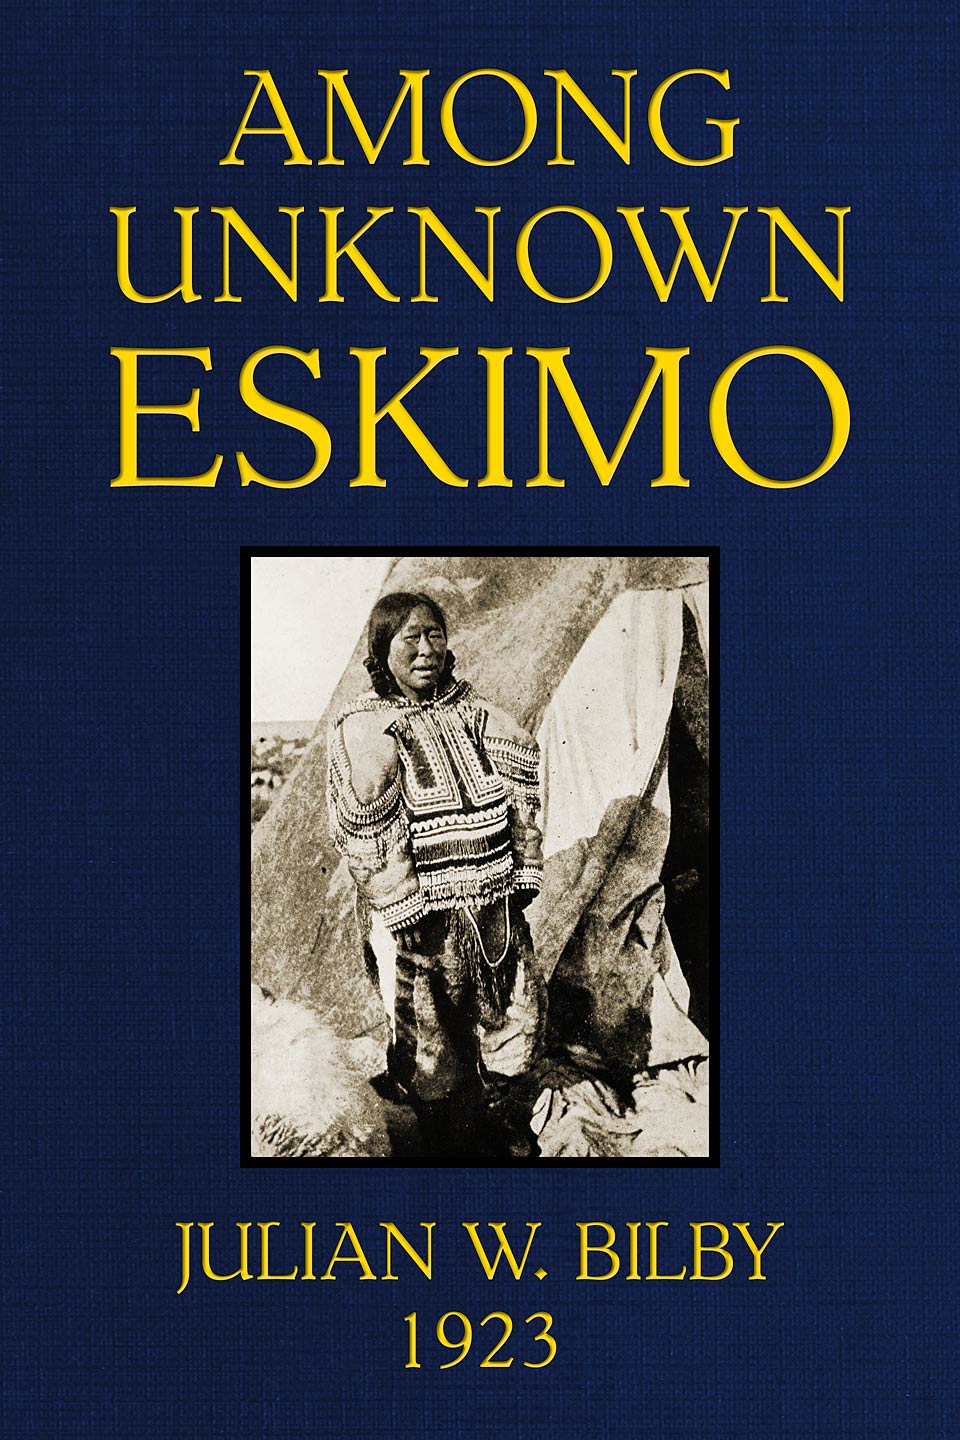 Among unknown Eskimo